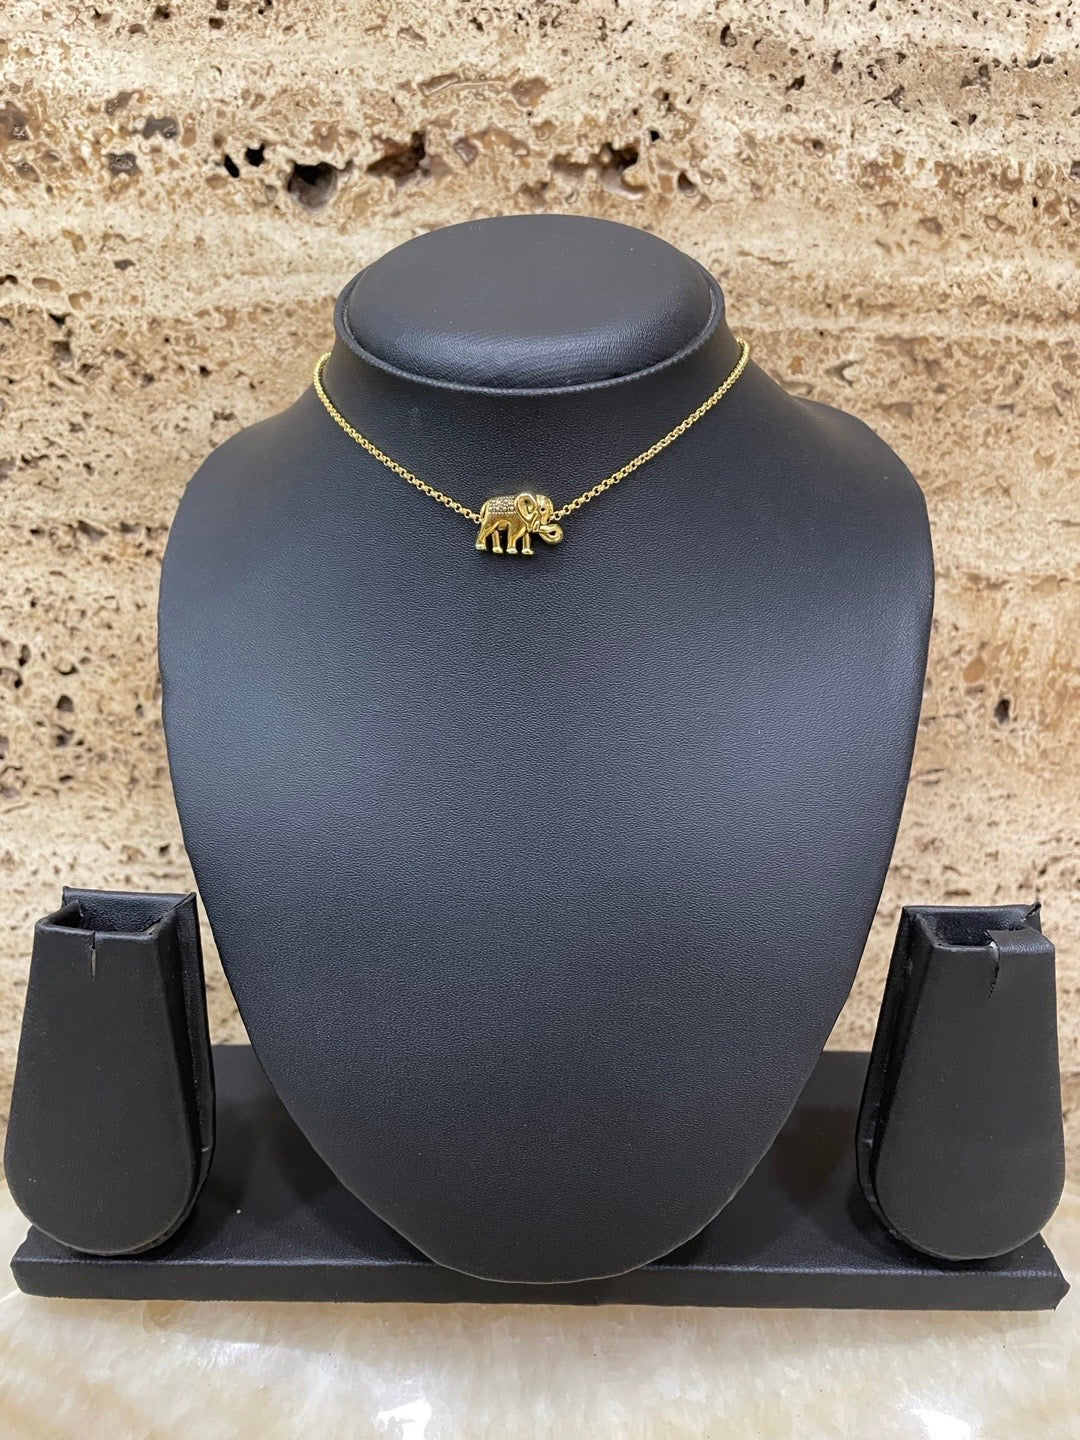 Gold Plated Choker Necklace Elephant Design Pendant